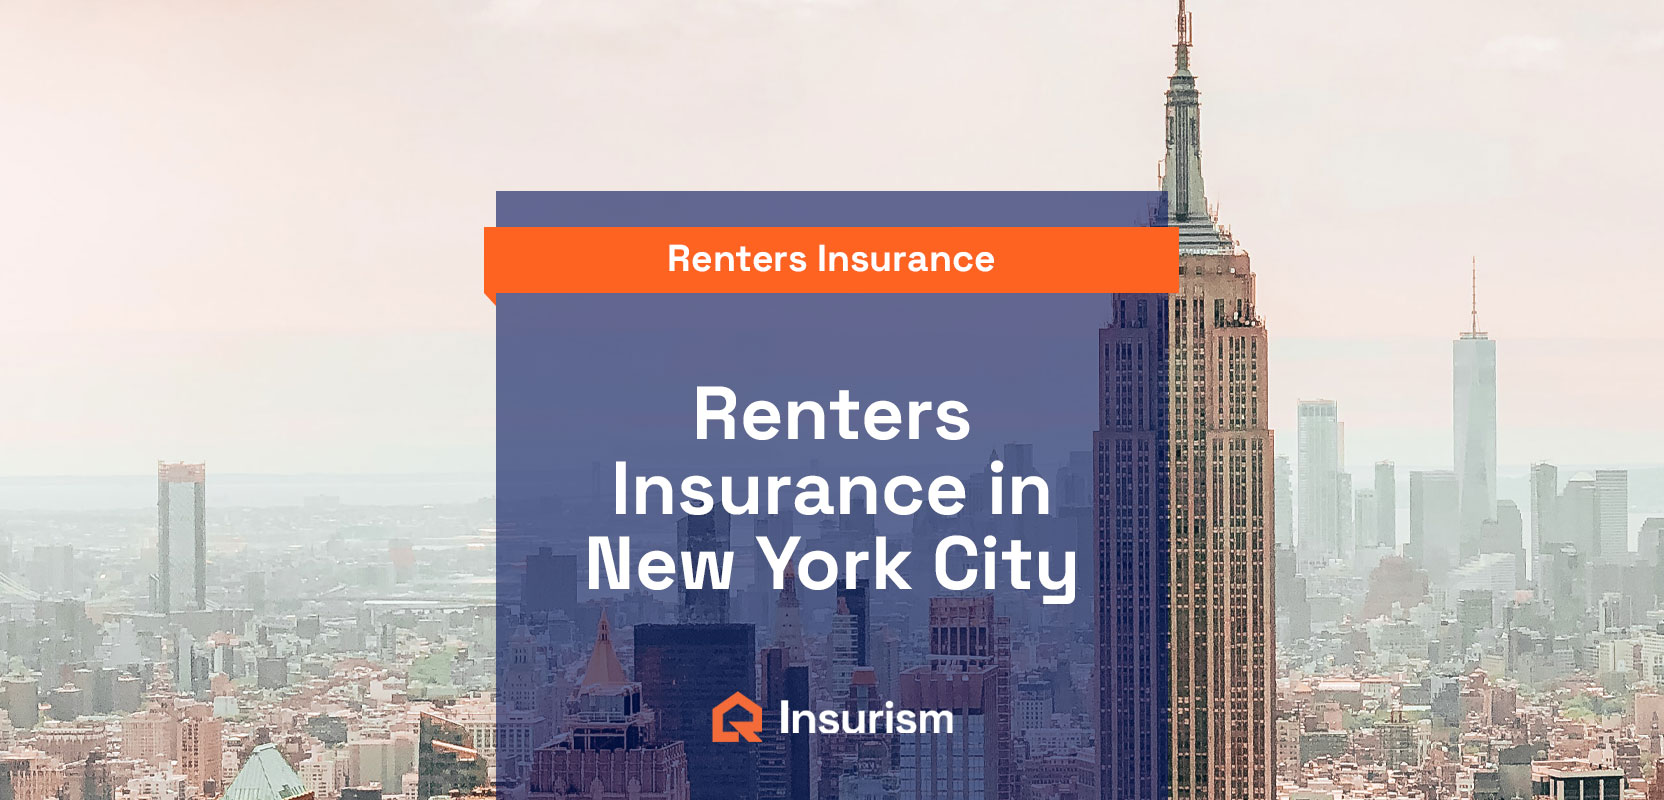 Renters insurance in New York City